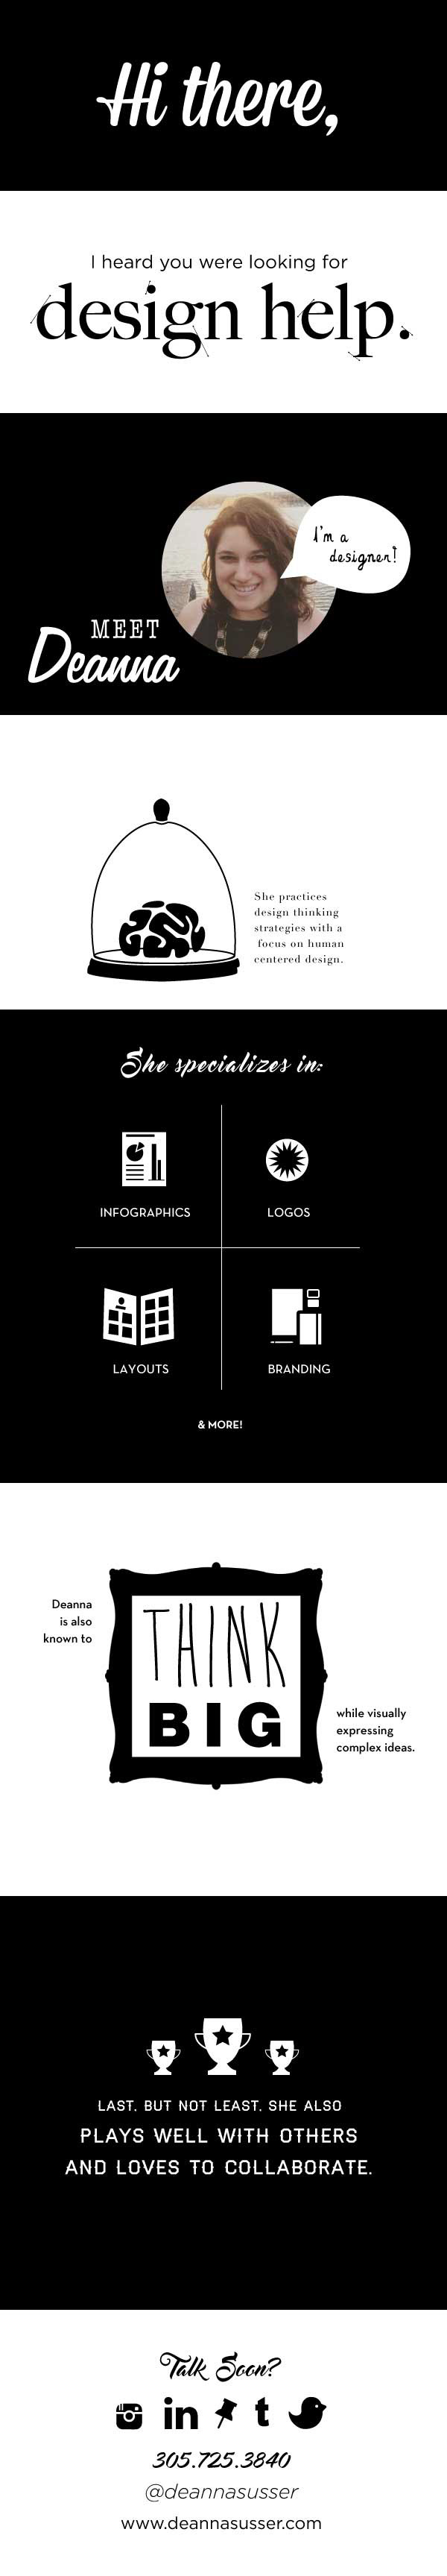 infographic Email promo selfpromotion Proposal information design logo Promotion marketing  